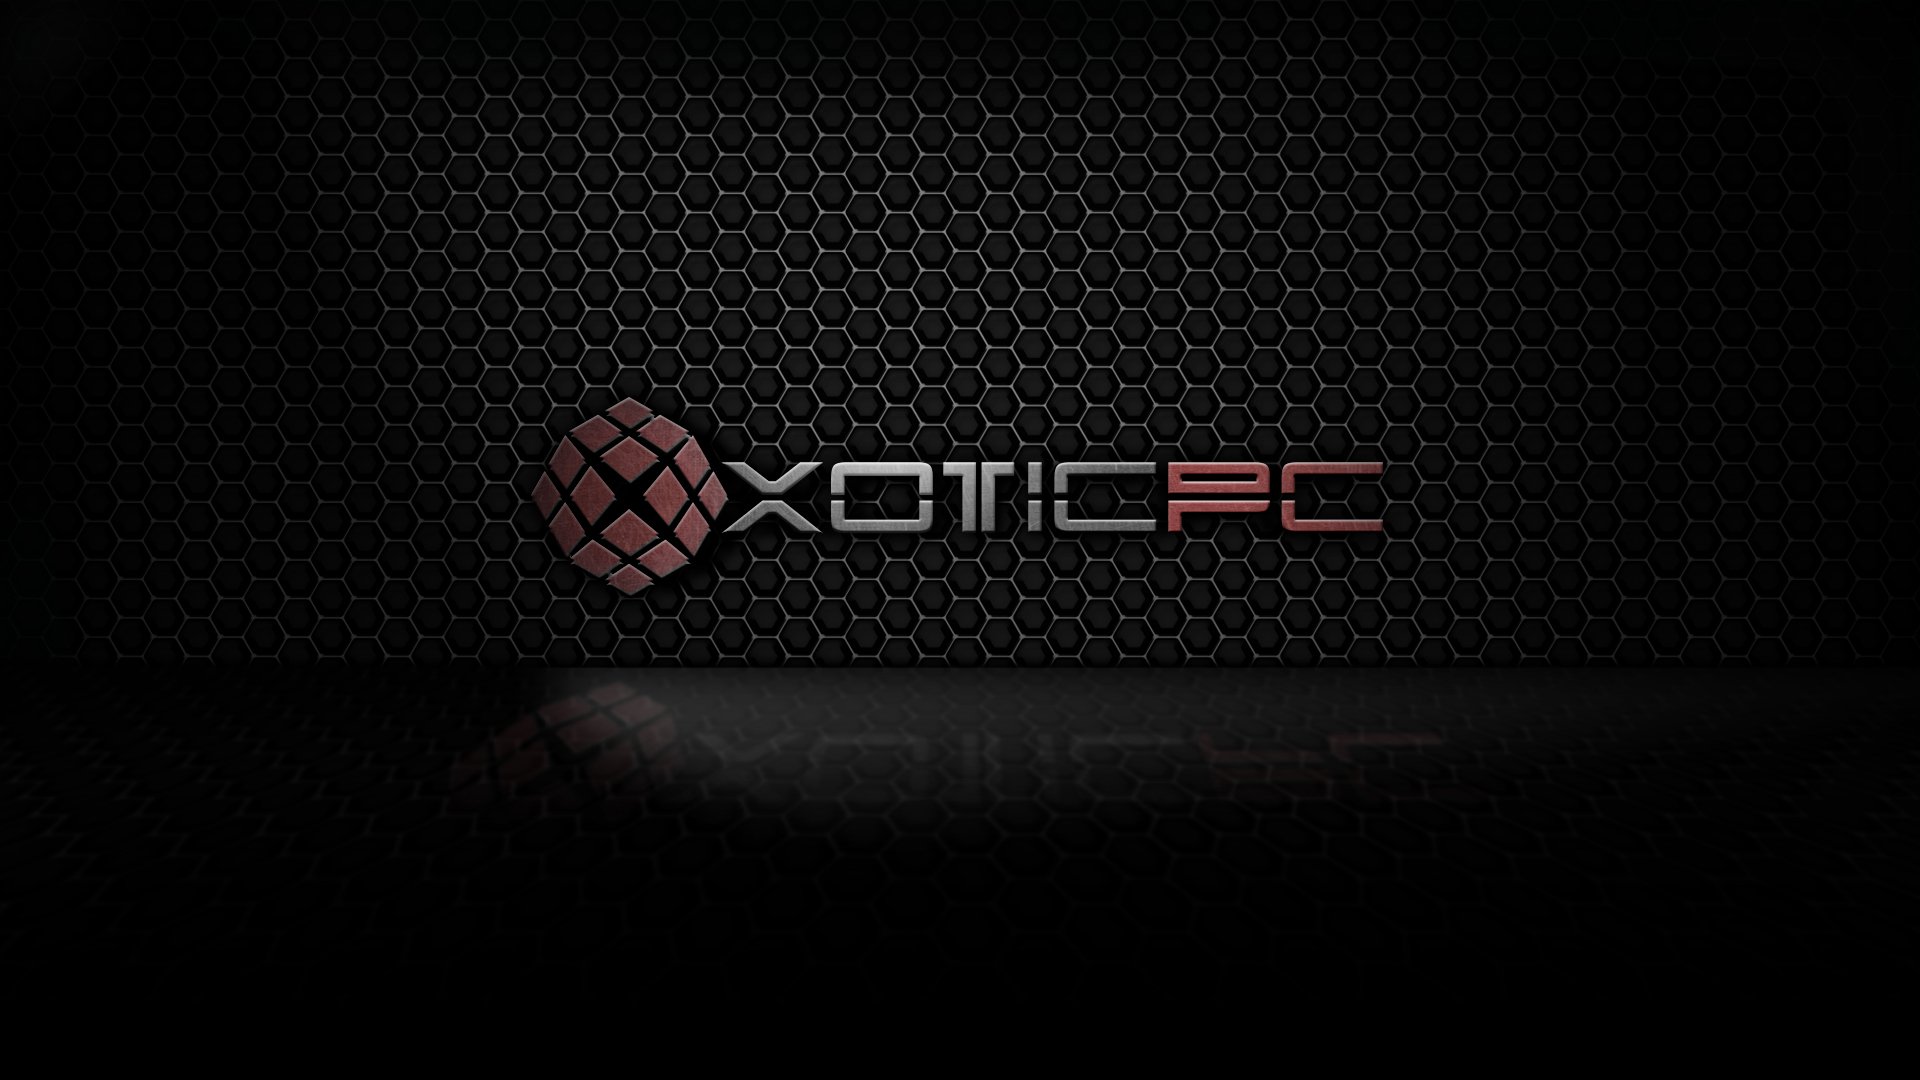 Xotic Pc Gaming Puter Wallpaper